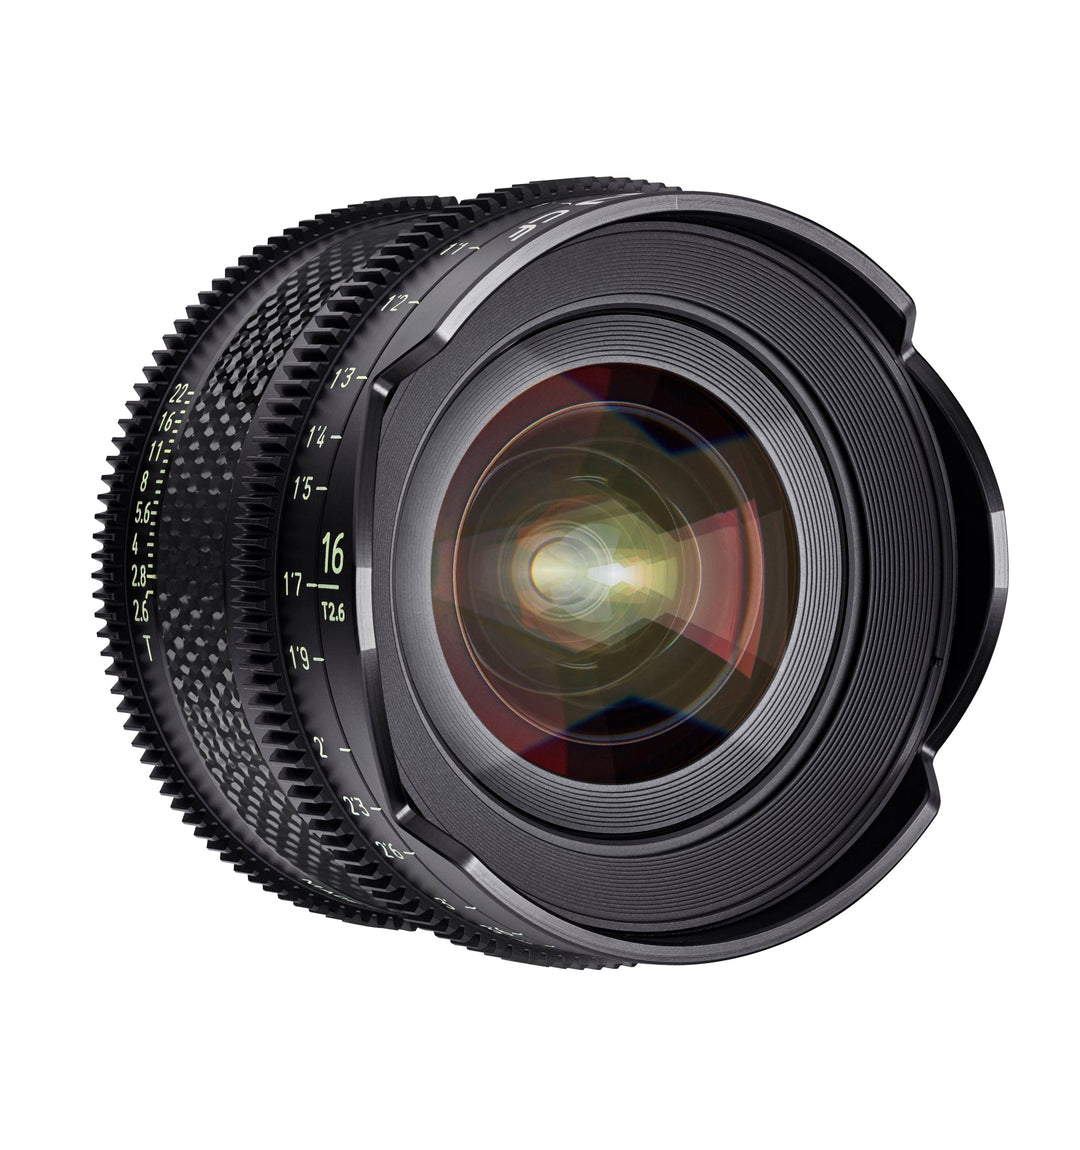 16, 24, 35, 50, 85mm XEEN CF Pro Cinema Lens Bundle - Rokinon